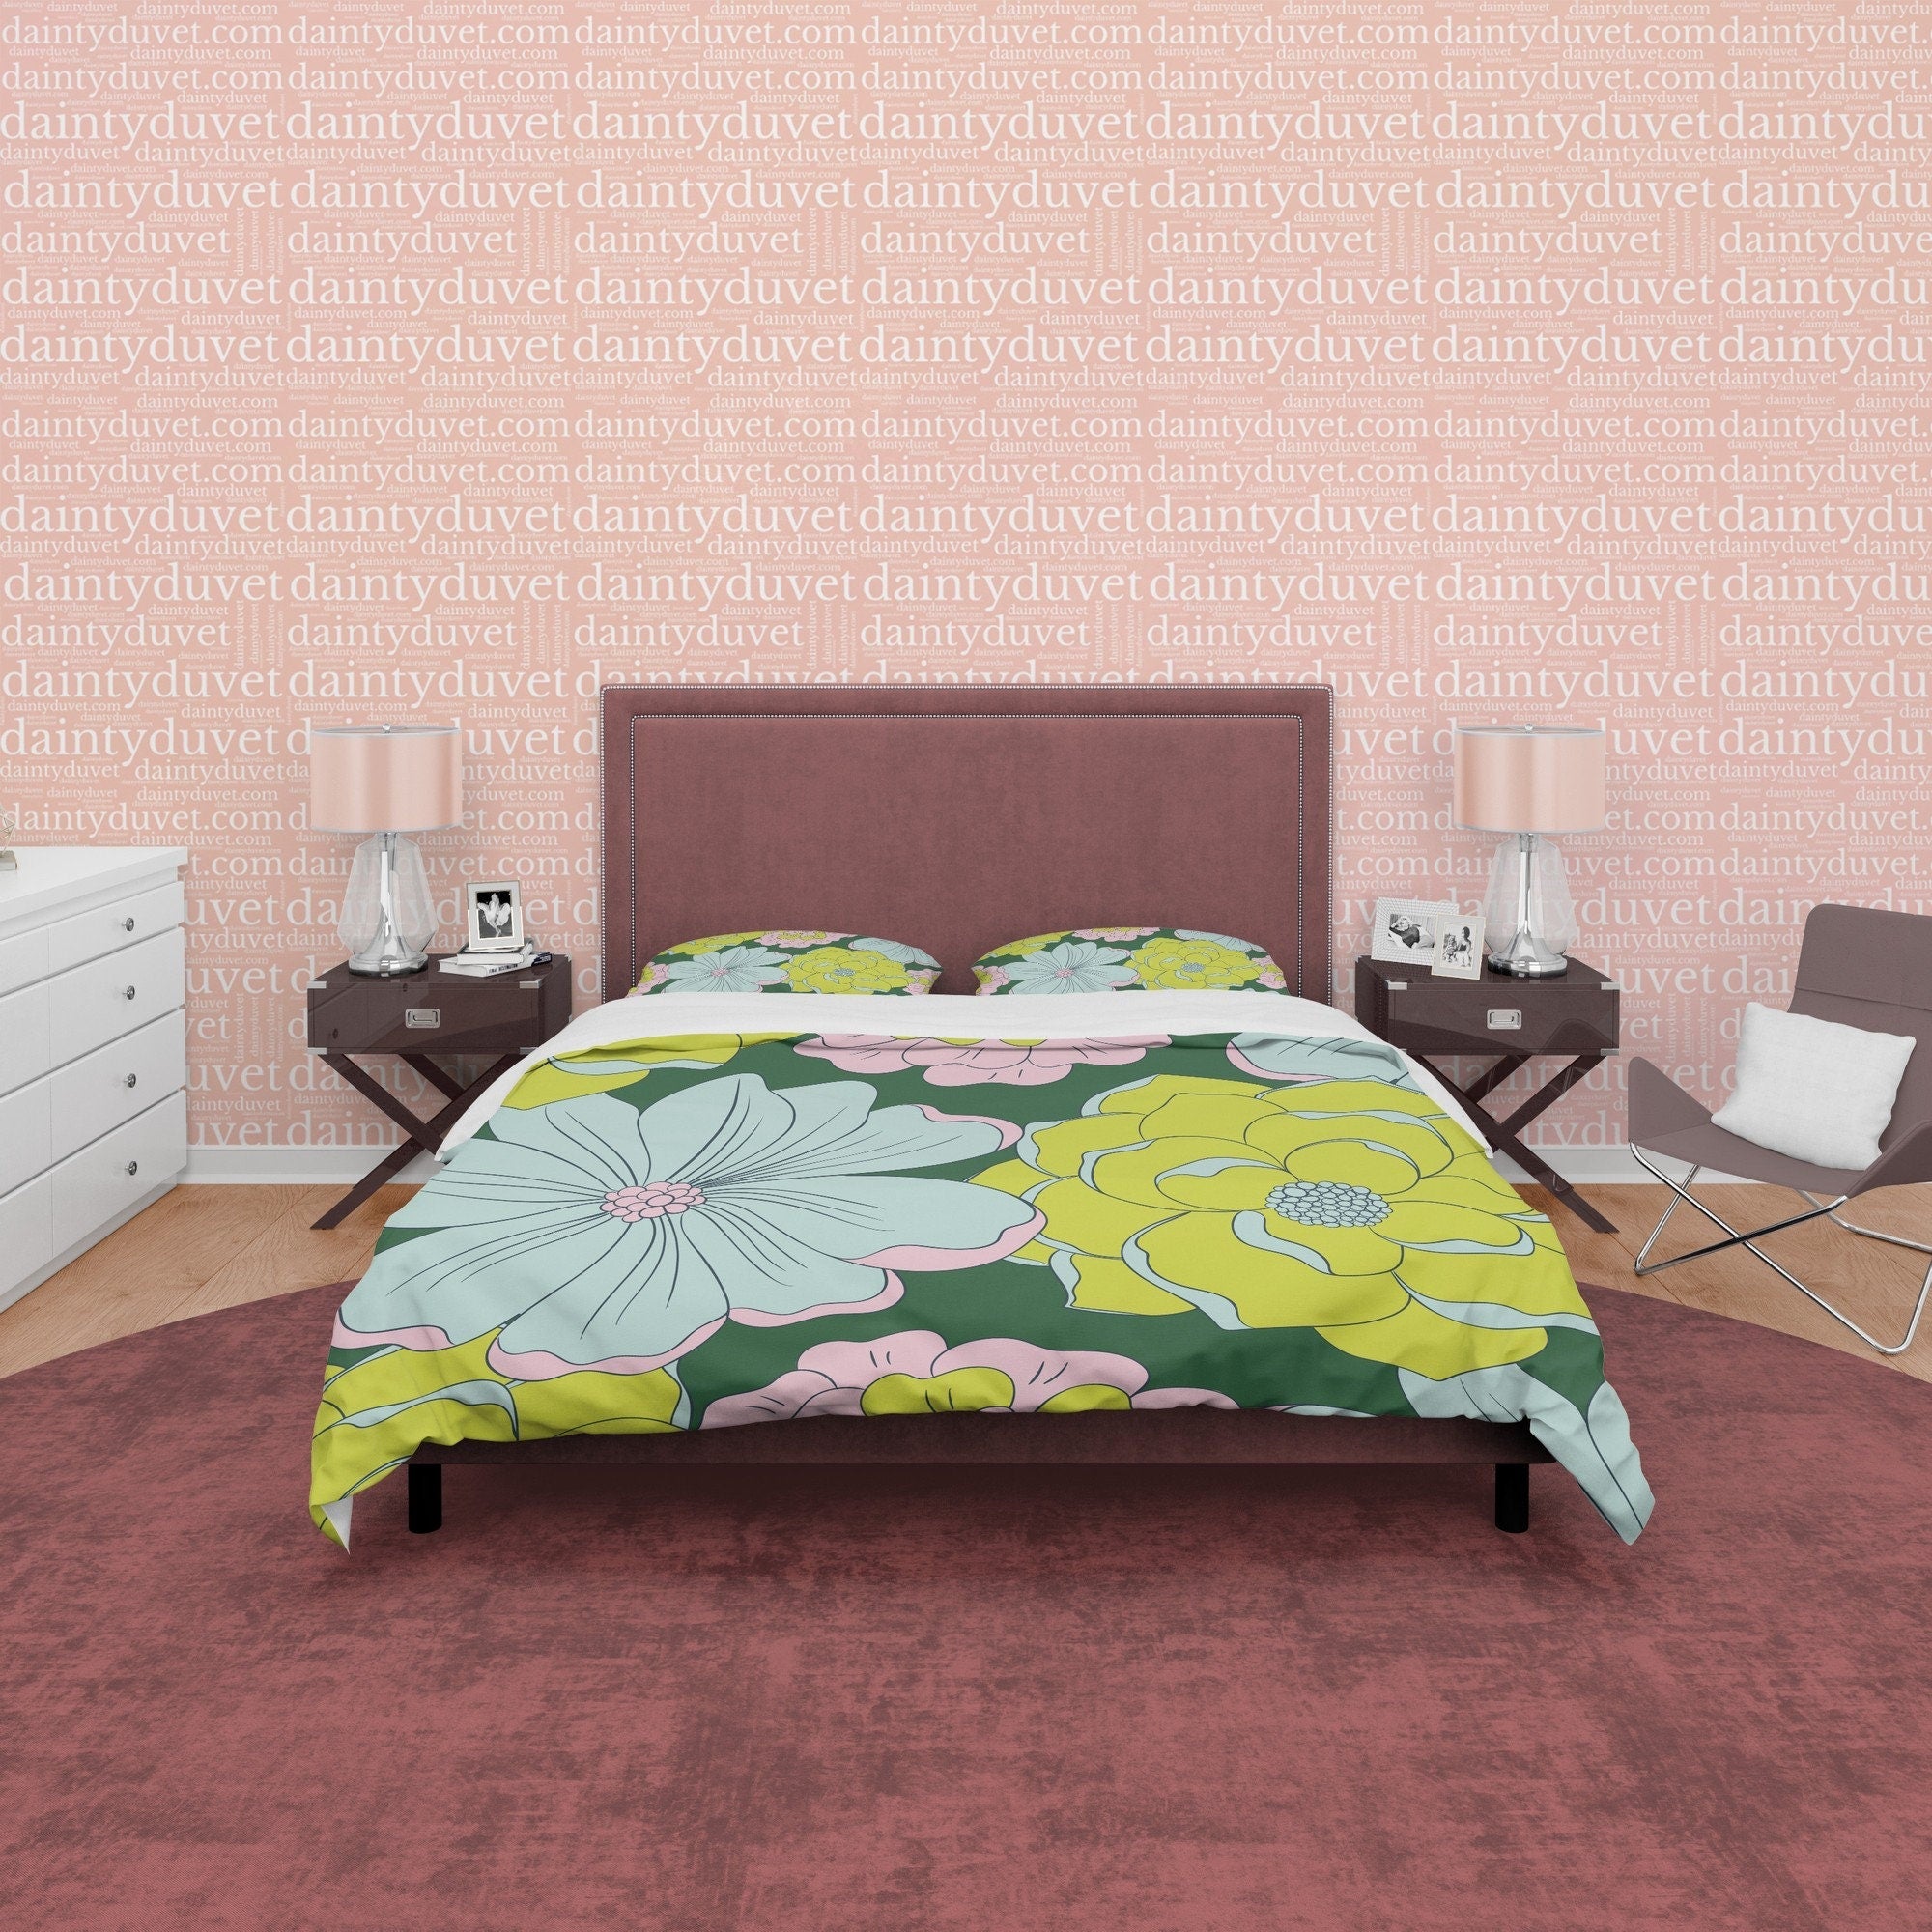 Flower Boho Bedding Colorful Duvet Cover Bohemian Bedroom Set, Floral Quilt Cover, Aesthetic Bedspread, Bright Colors Unique Room Decor